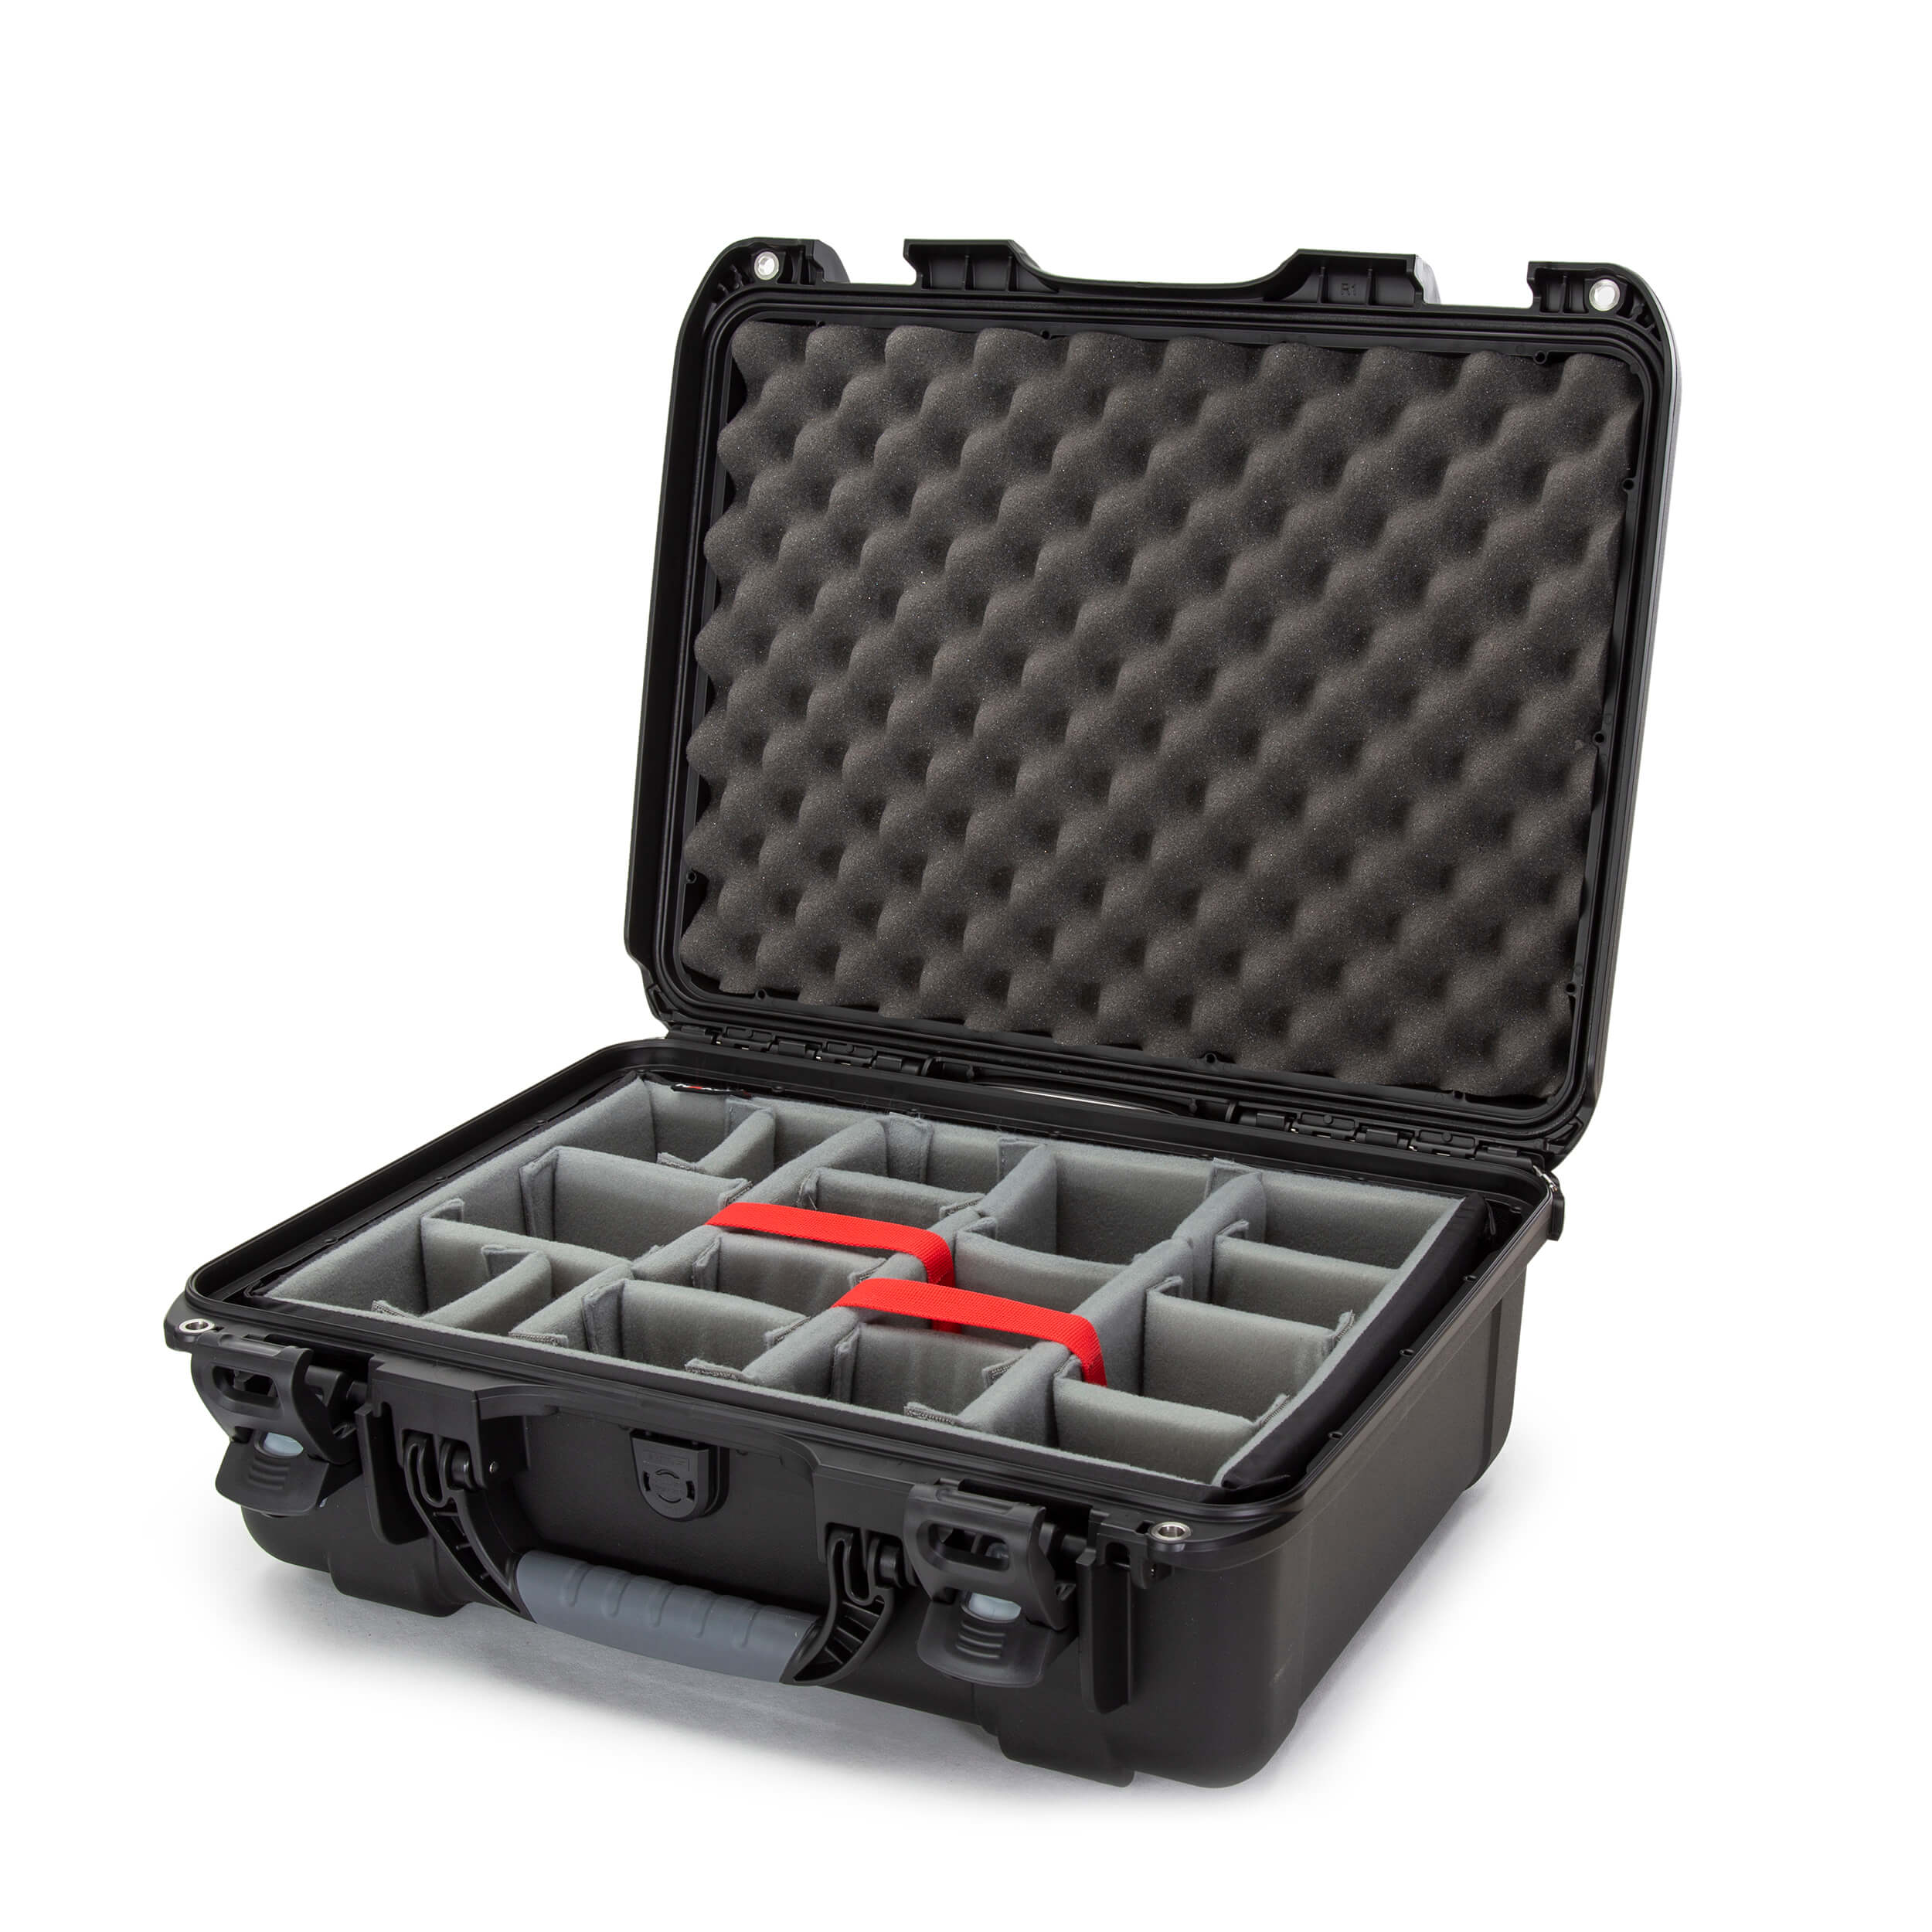 NANUK 930 For DJI™ Ronin-SC2 Gimbal Hard Case - Buy Here – NANUK